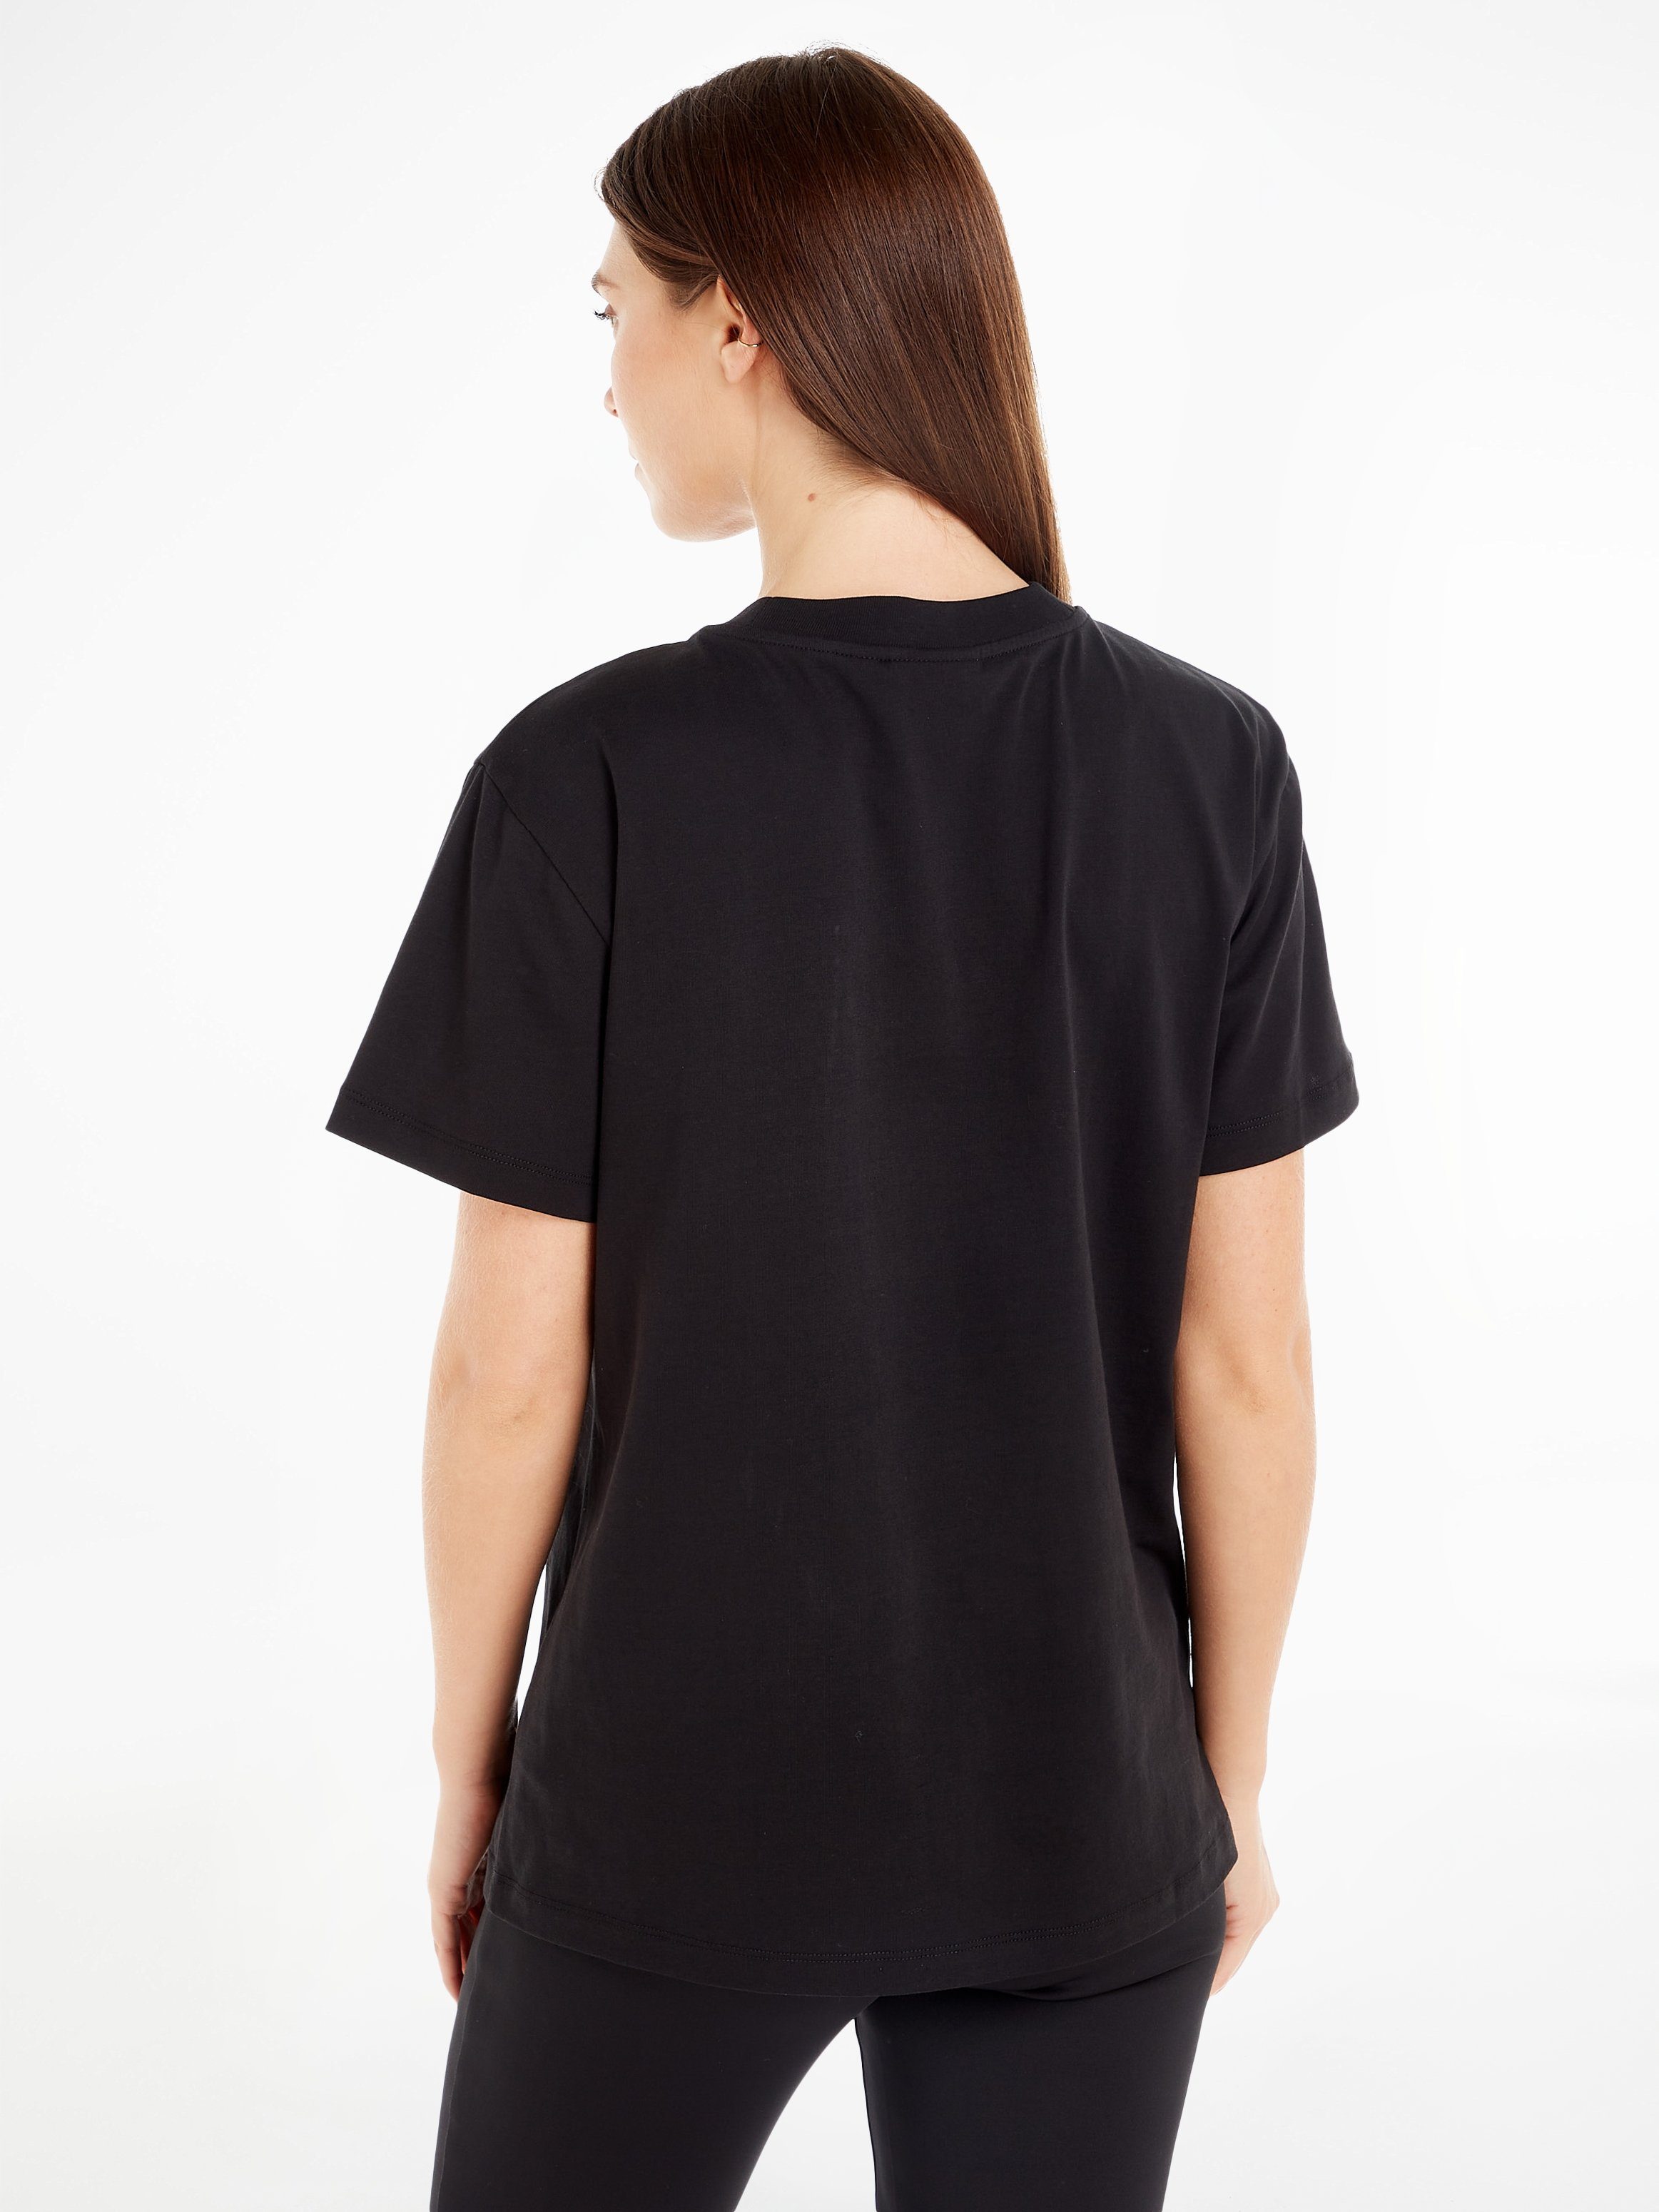 HERO schwarz Klein Shirt T-Shirt REGULAR LOGO Calvin